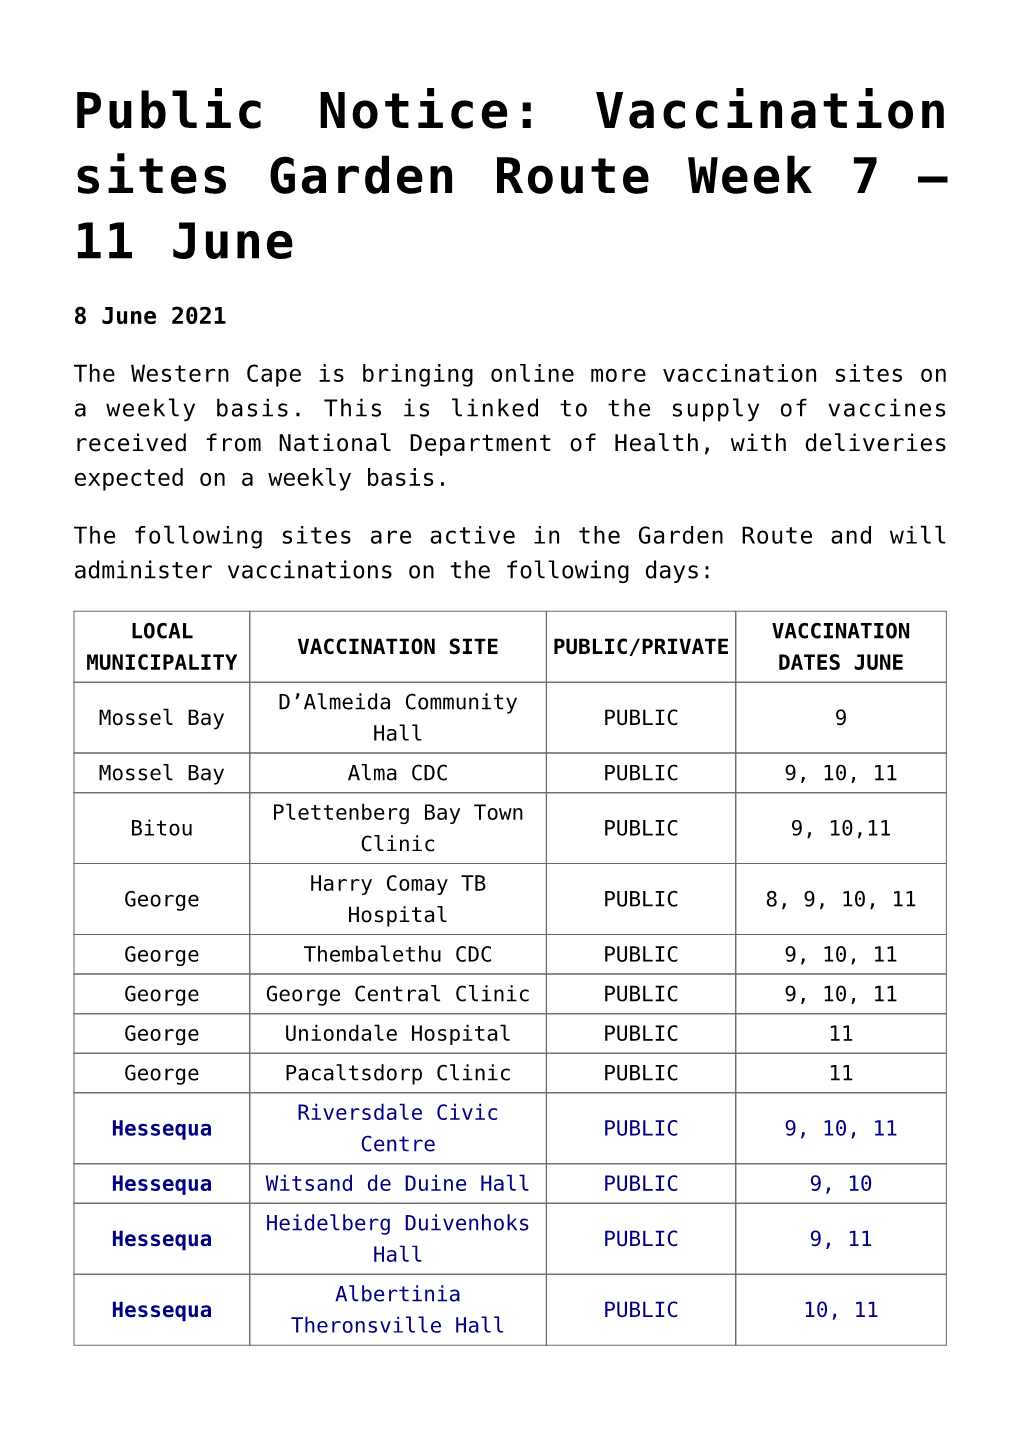 Public Notice: Vaccination Sites Garden Route Week 7 – 11 June